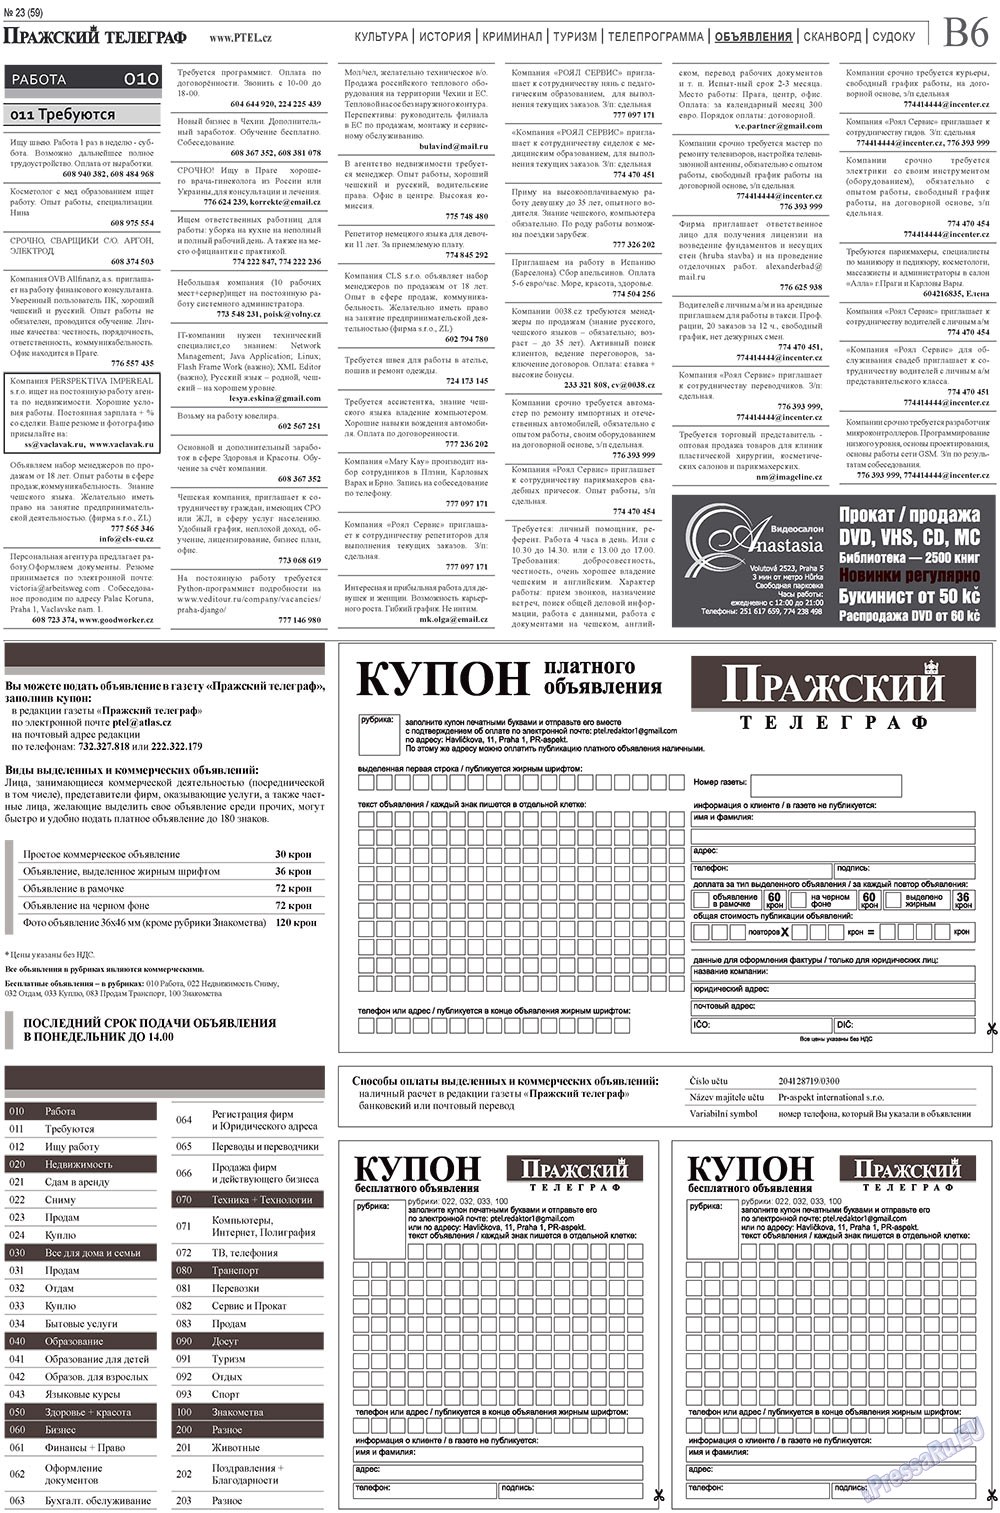 Пражский телеграф, газета. 2010 №23 стр.14